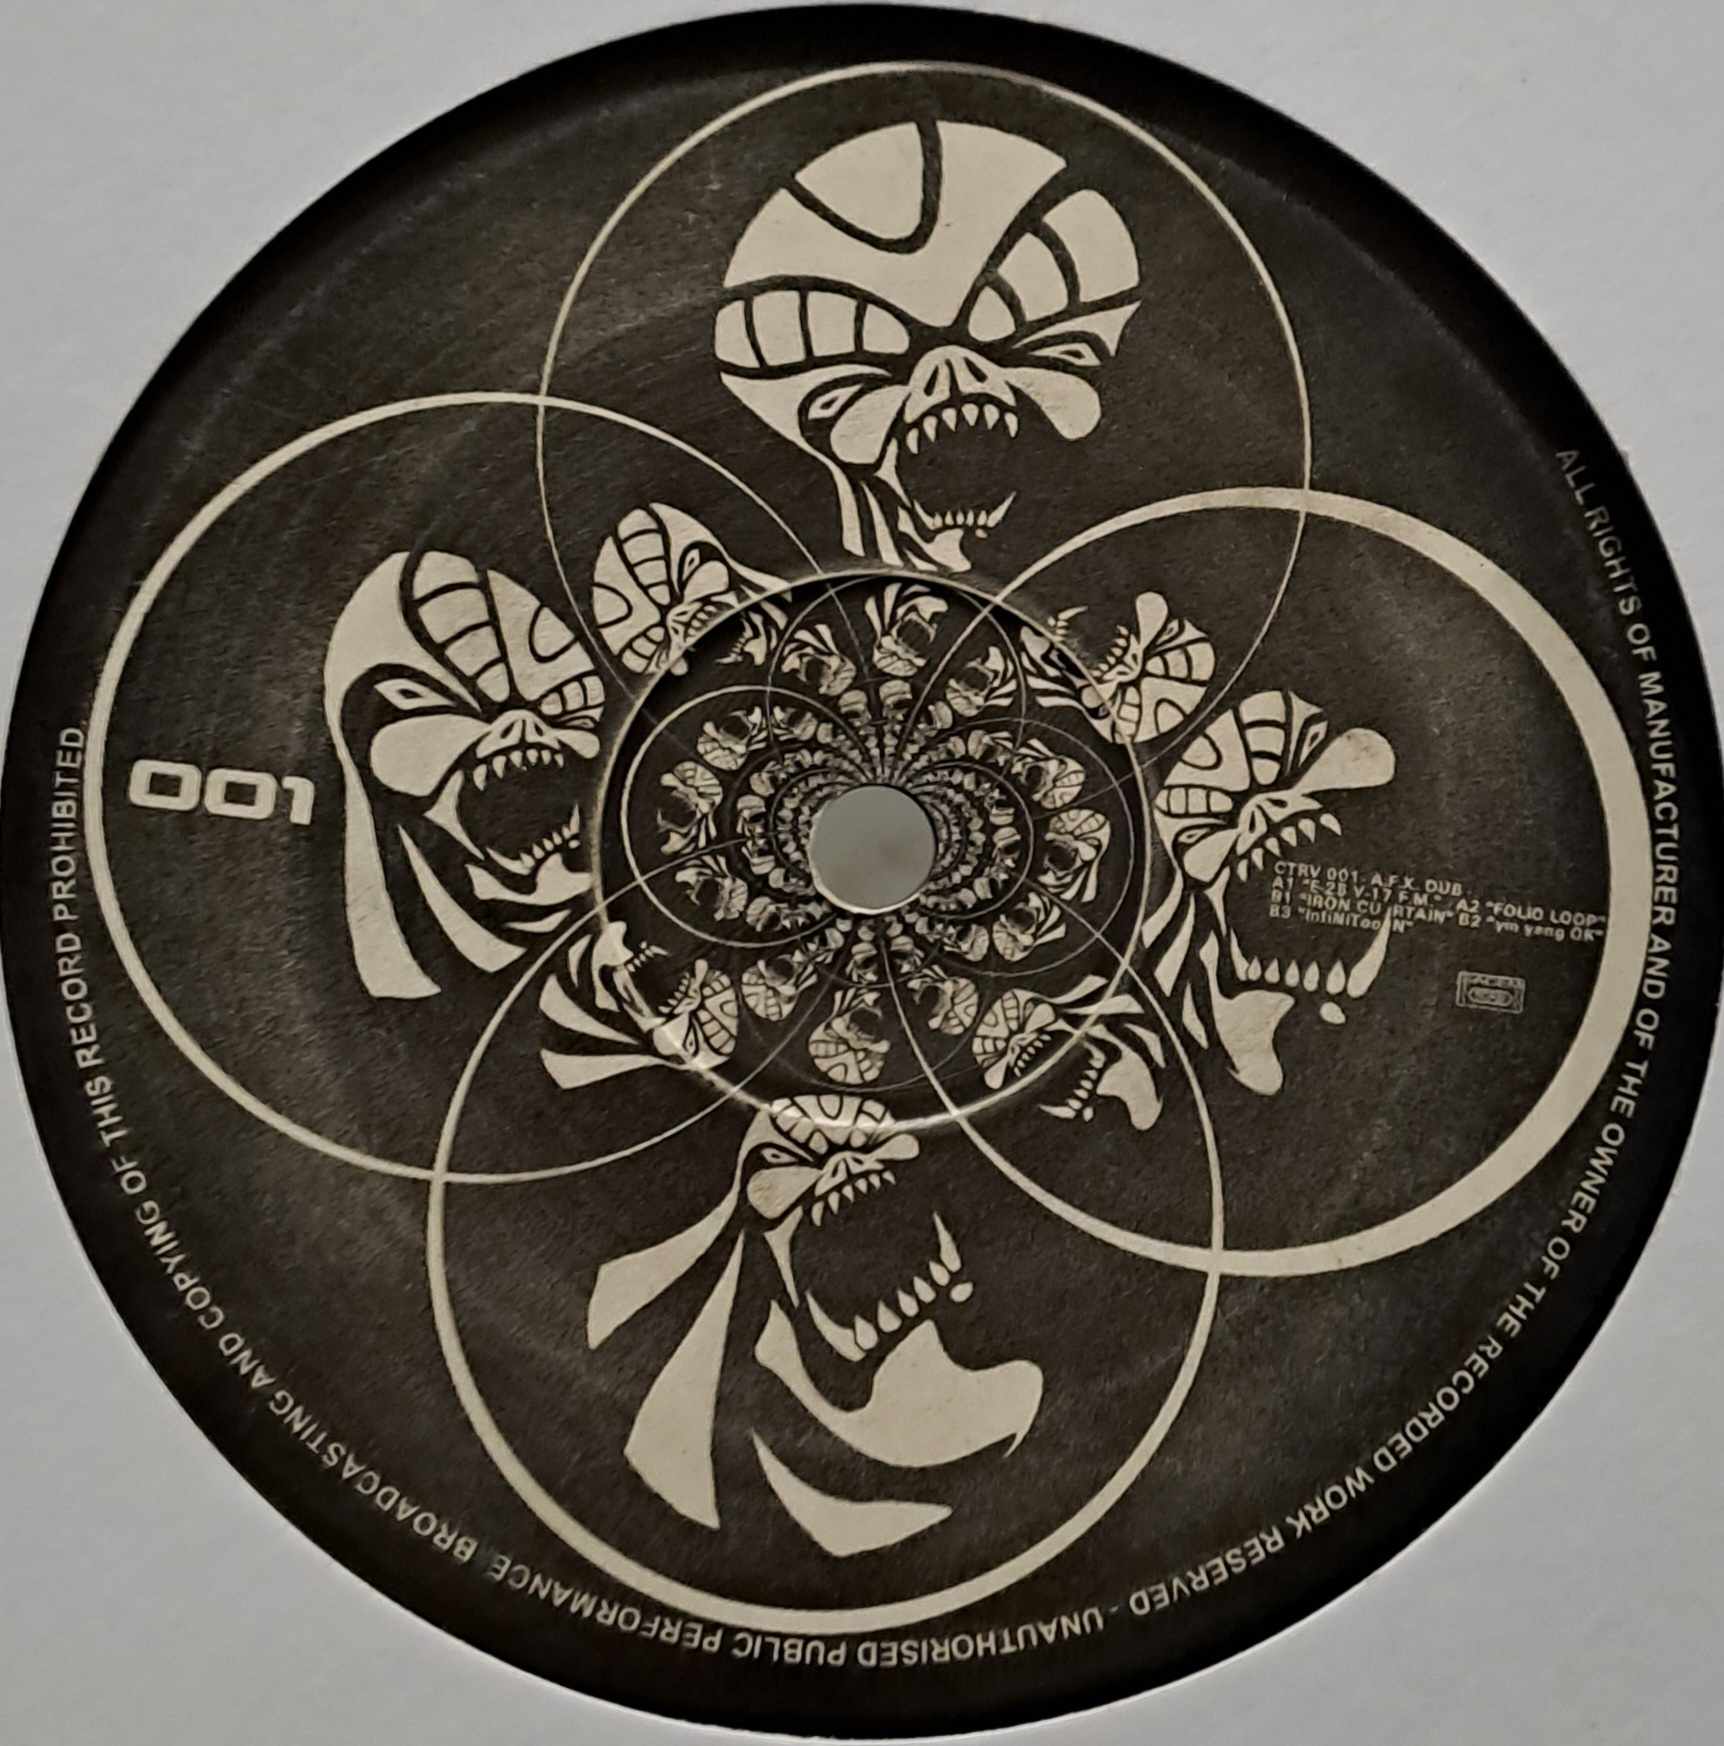 Contrarotative 01 (RP2002) - vinyle hardcore